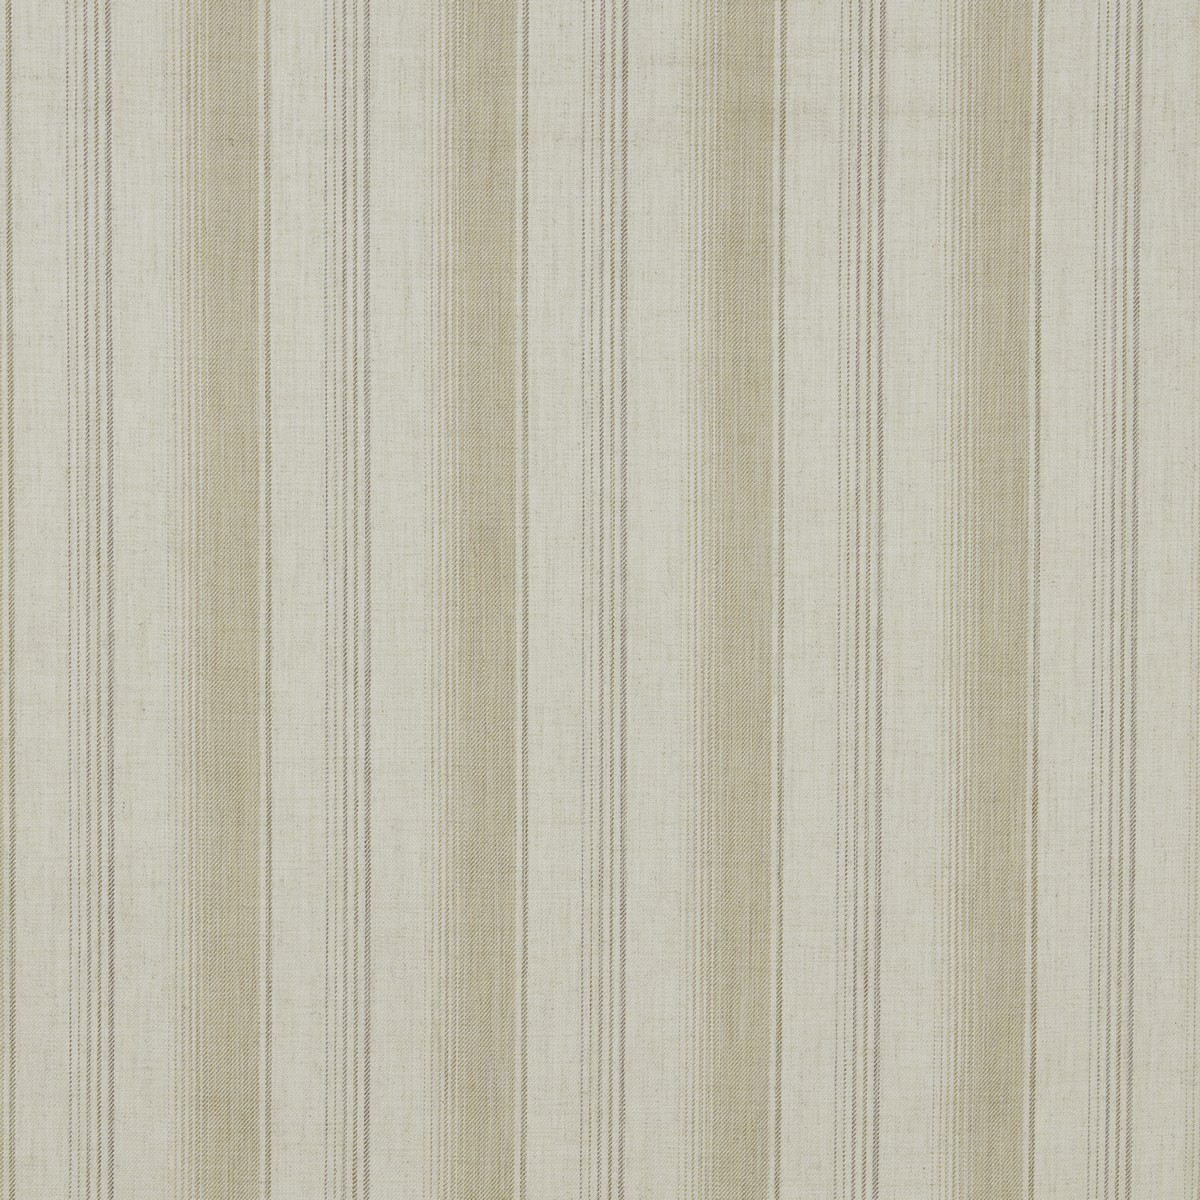 Sackville Stripe Mustard Fabric by iLiv